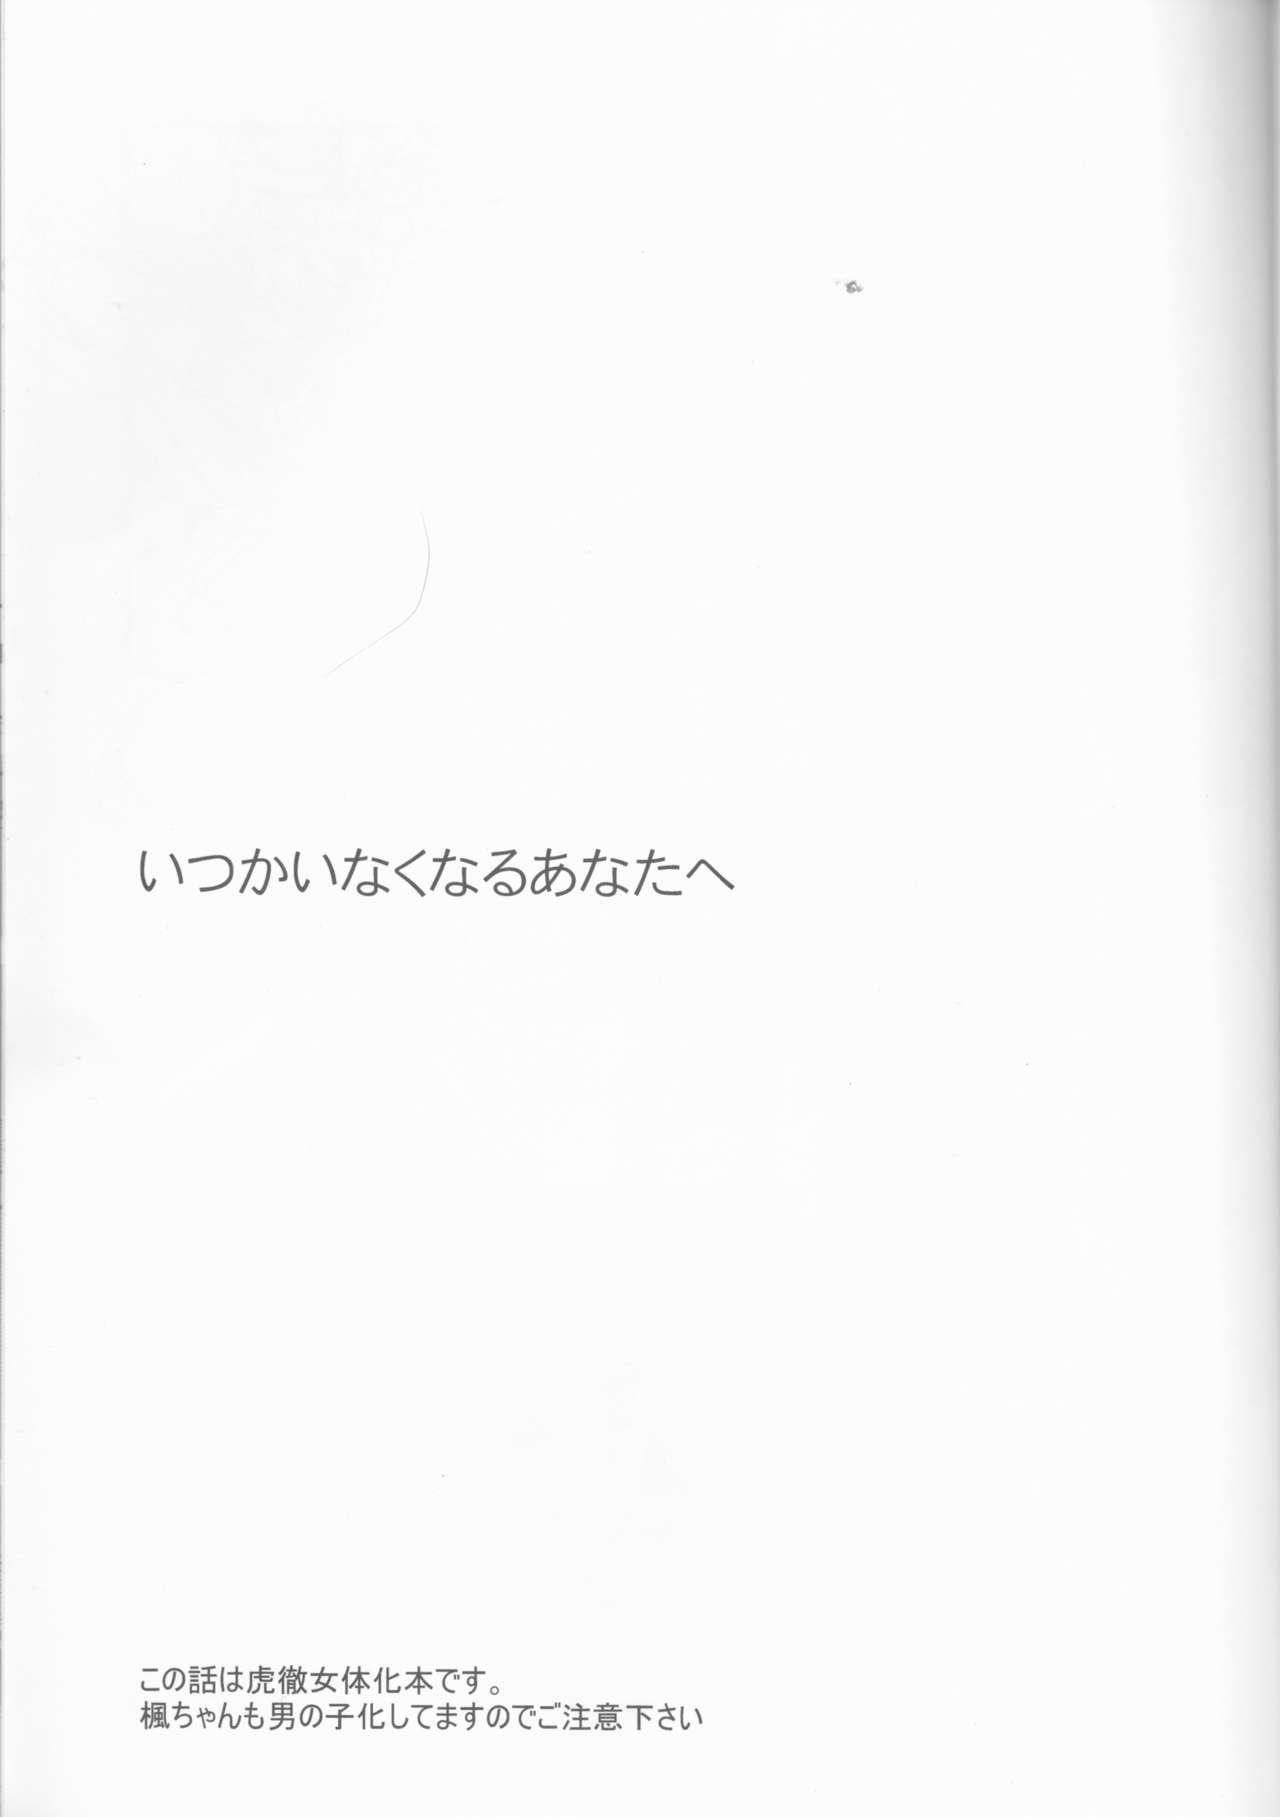 Amateurs Itsuka wa inaku naru kimi e - Tiger and bunny Facefuck - Page 2